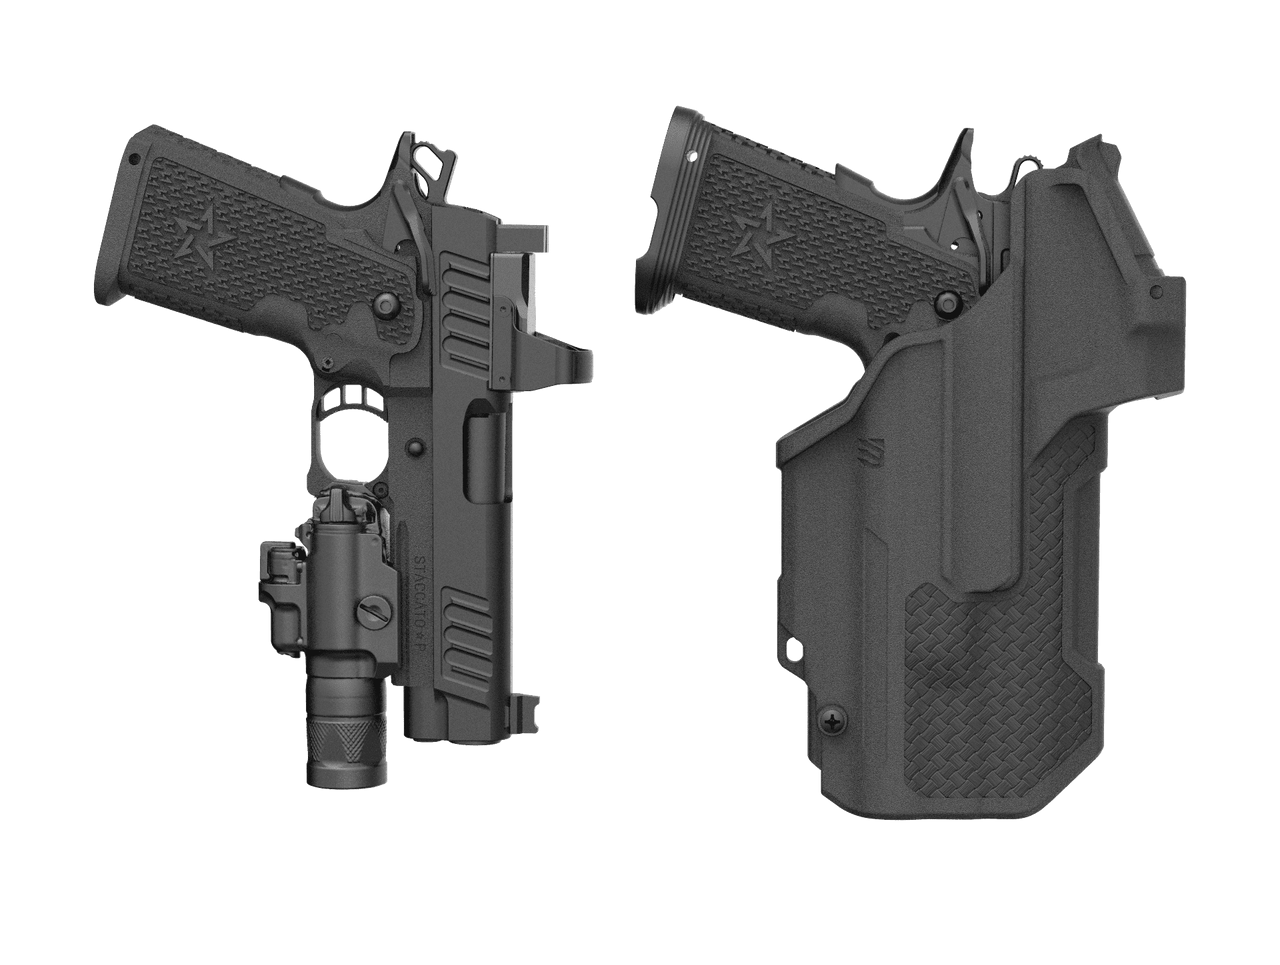 Blackhawk T-Series Level 3 Glock Duty Holster Right Handed